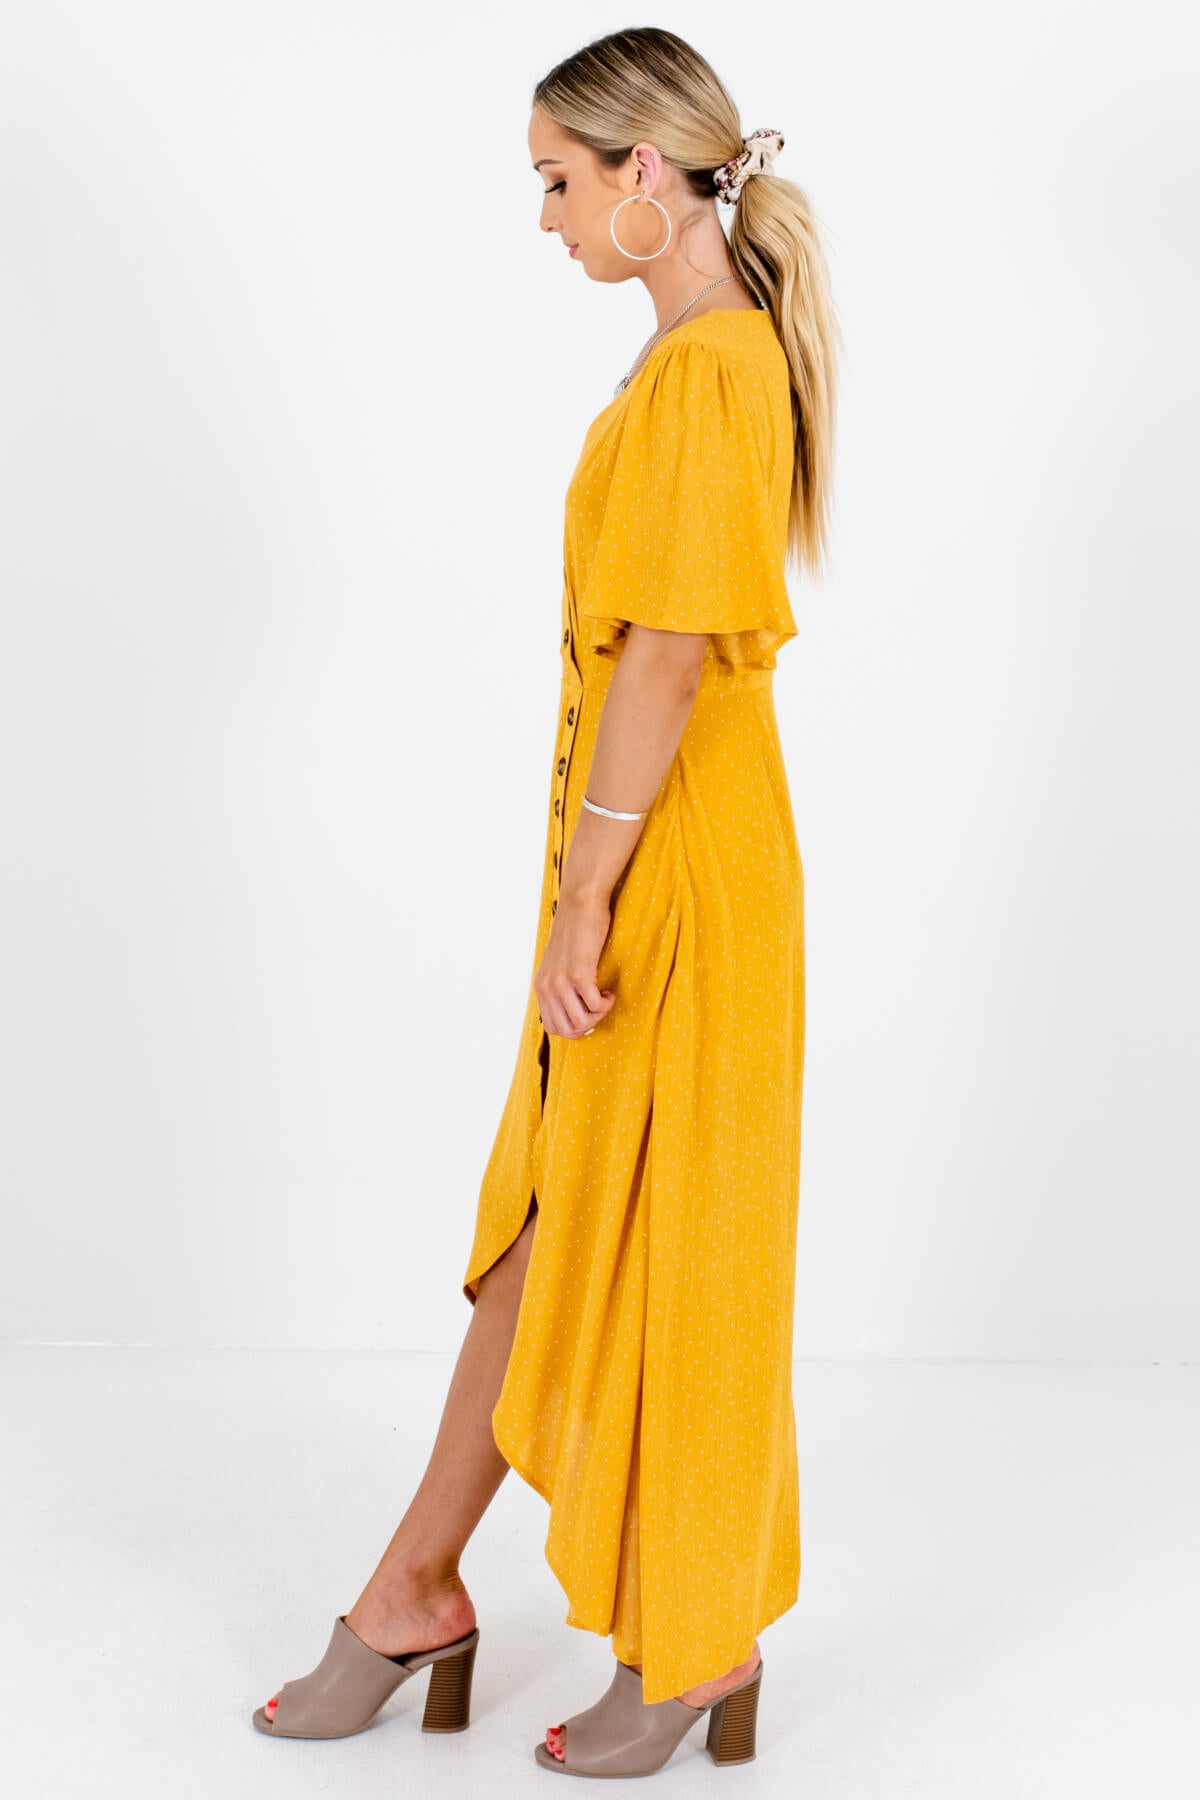 Mustard Yellow High-Low Hem Boutique Maxi Dresses for Women